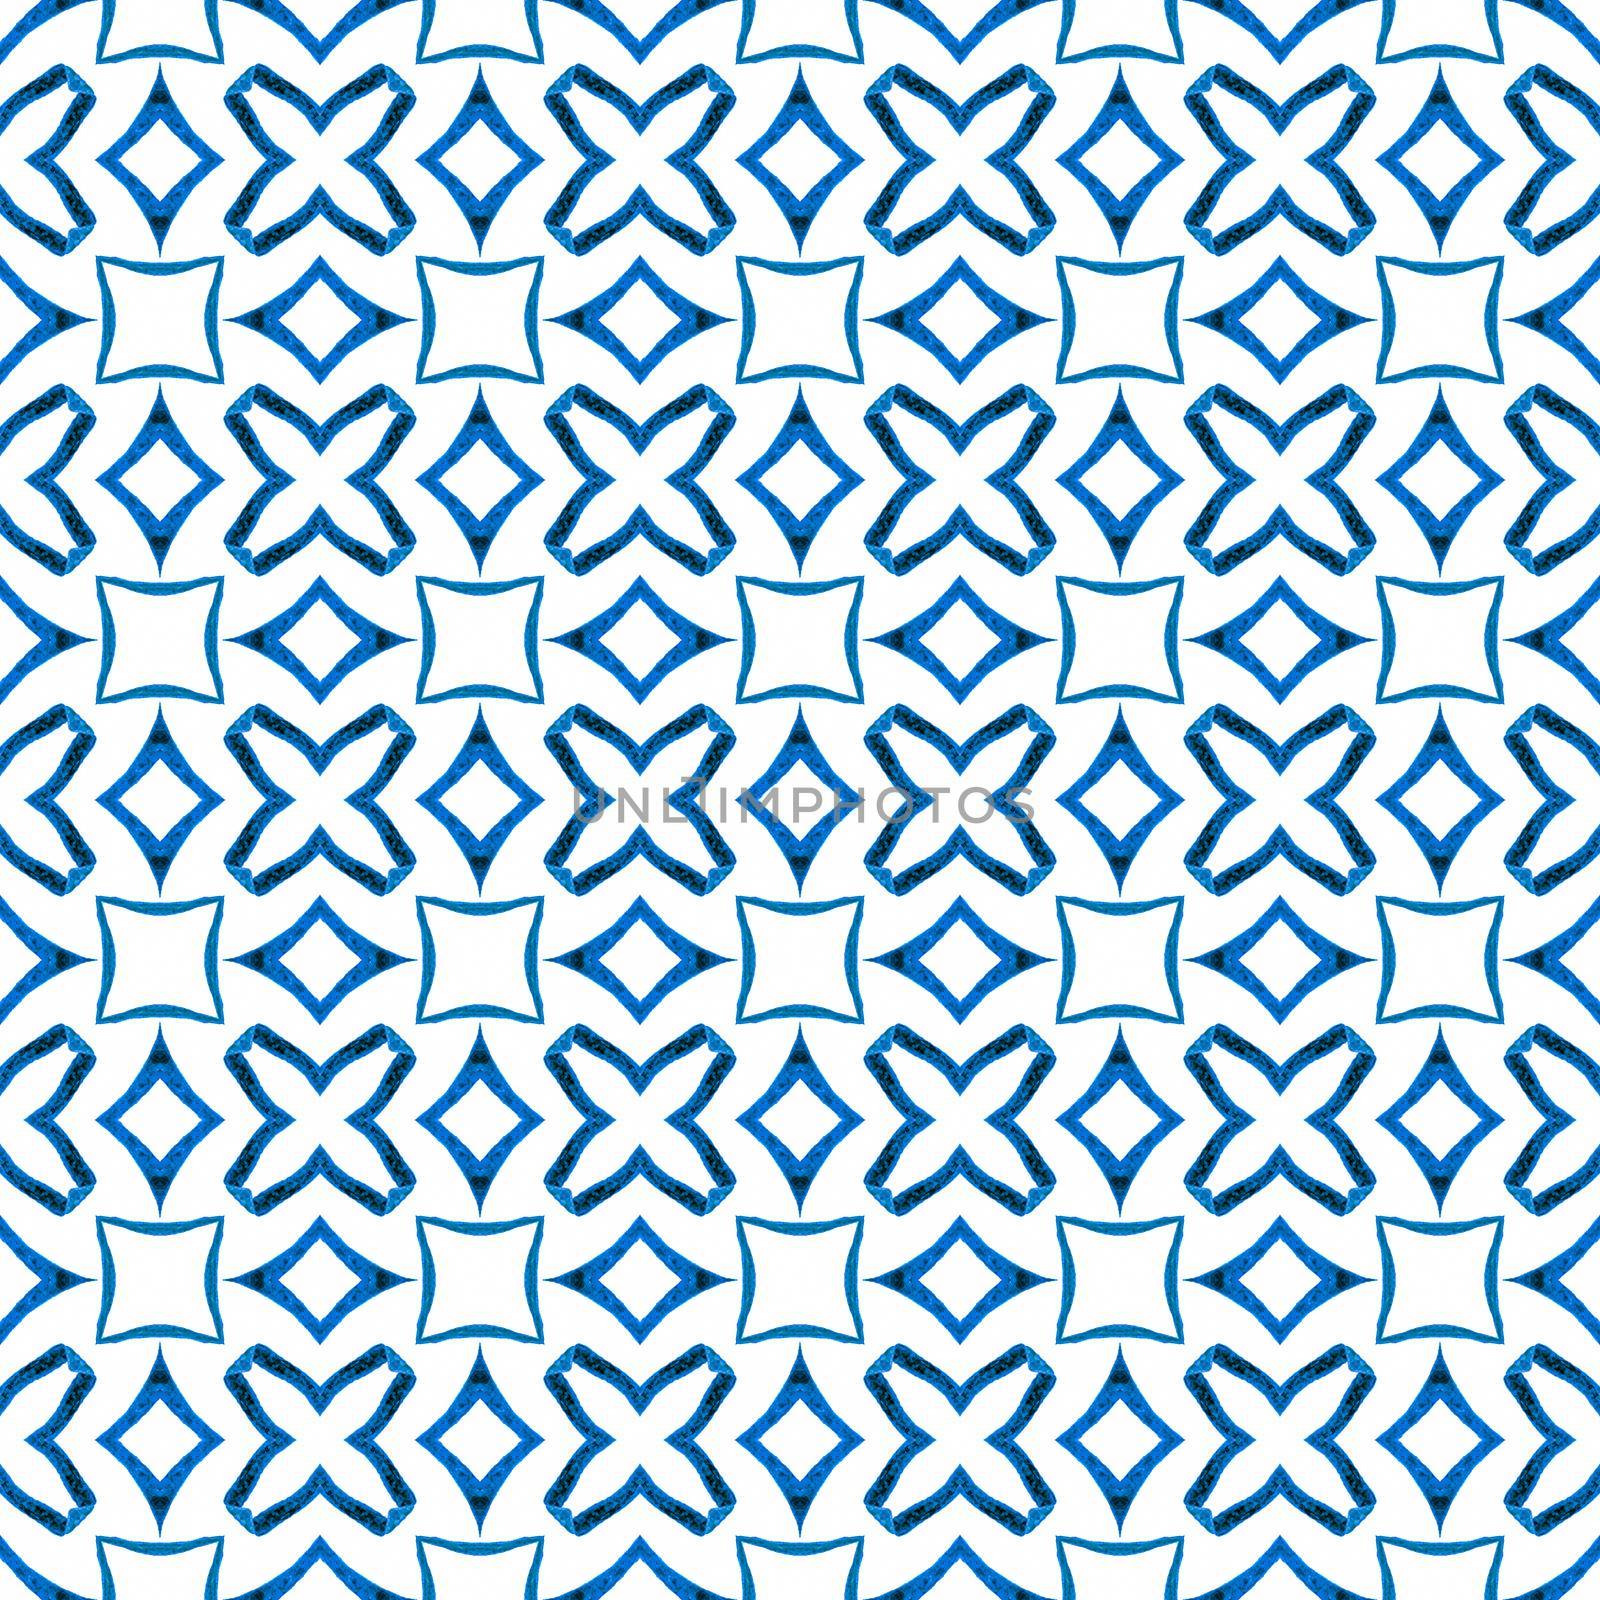 Textile ready elegant print, swimwear fabric, wallpaper, wrapping. Blue worthy boho chic summer design. Arabesque hand drawn design. Oriental arabesque hand drawn border.